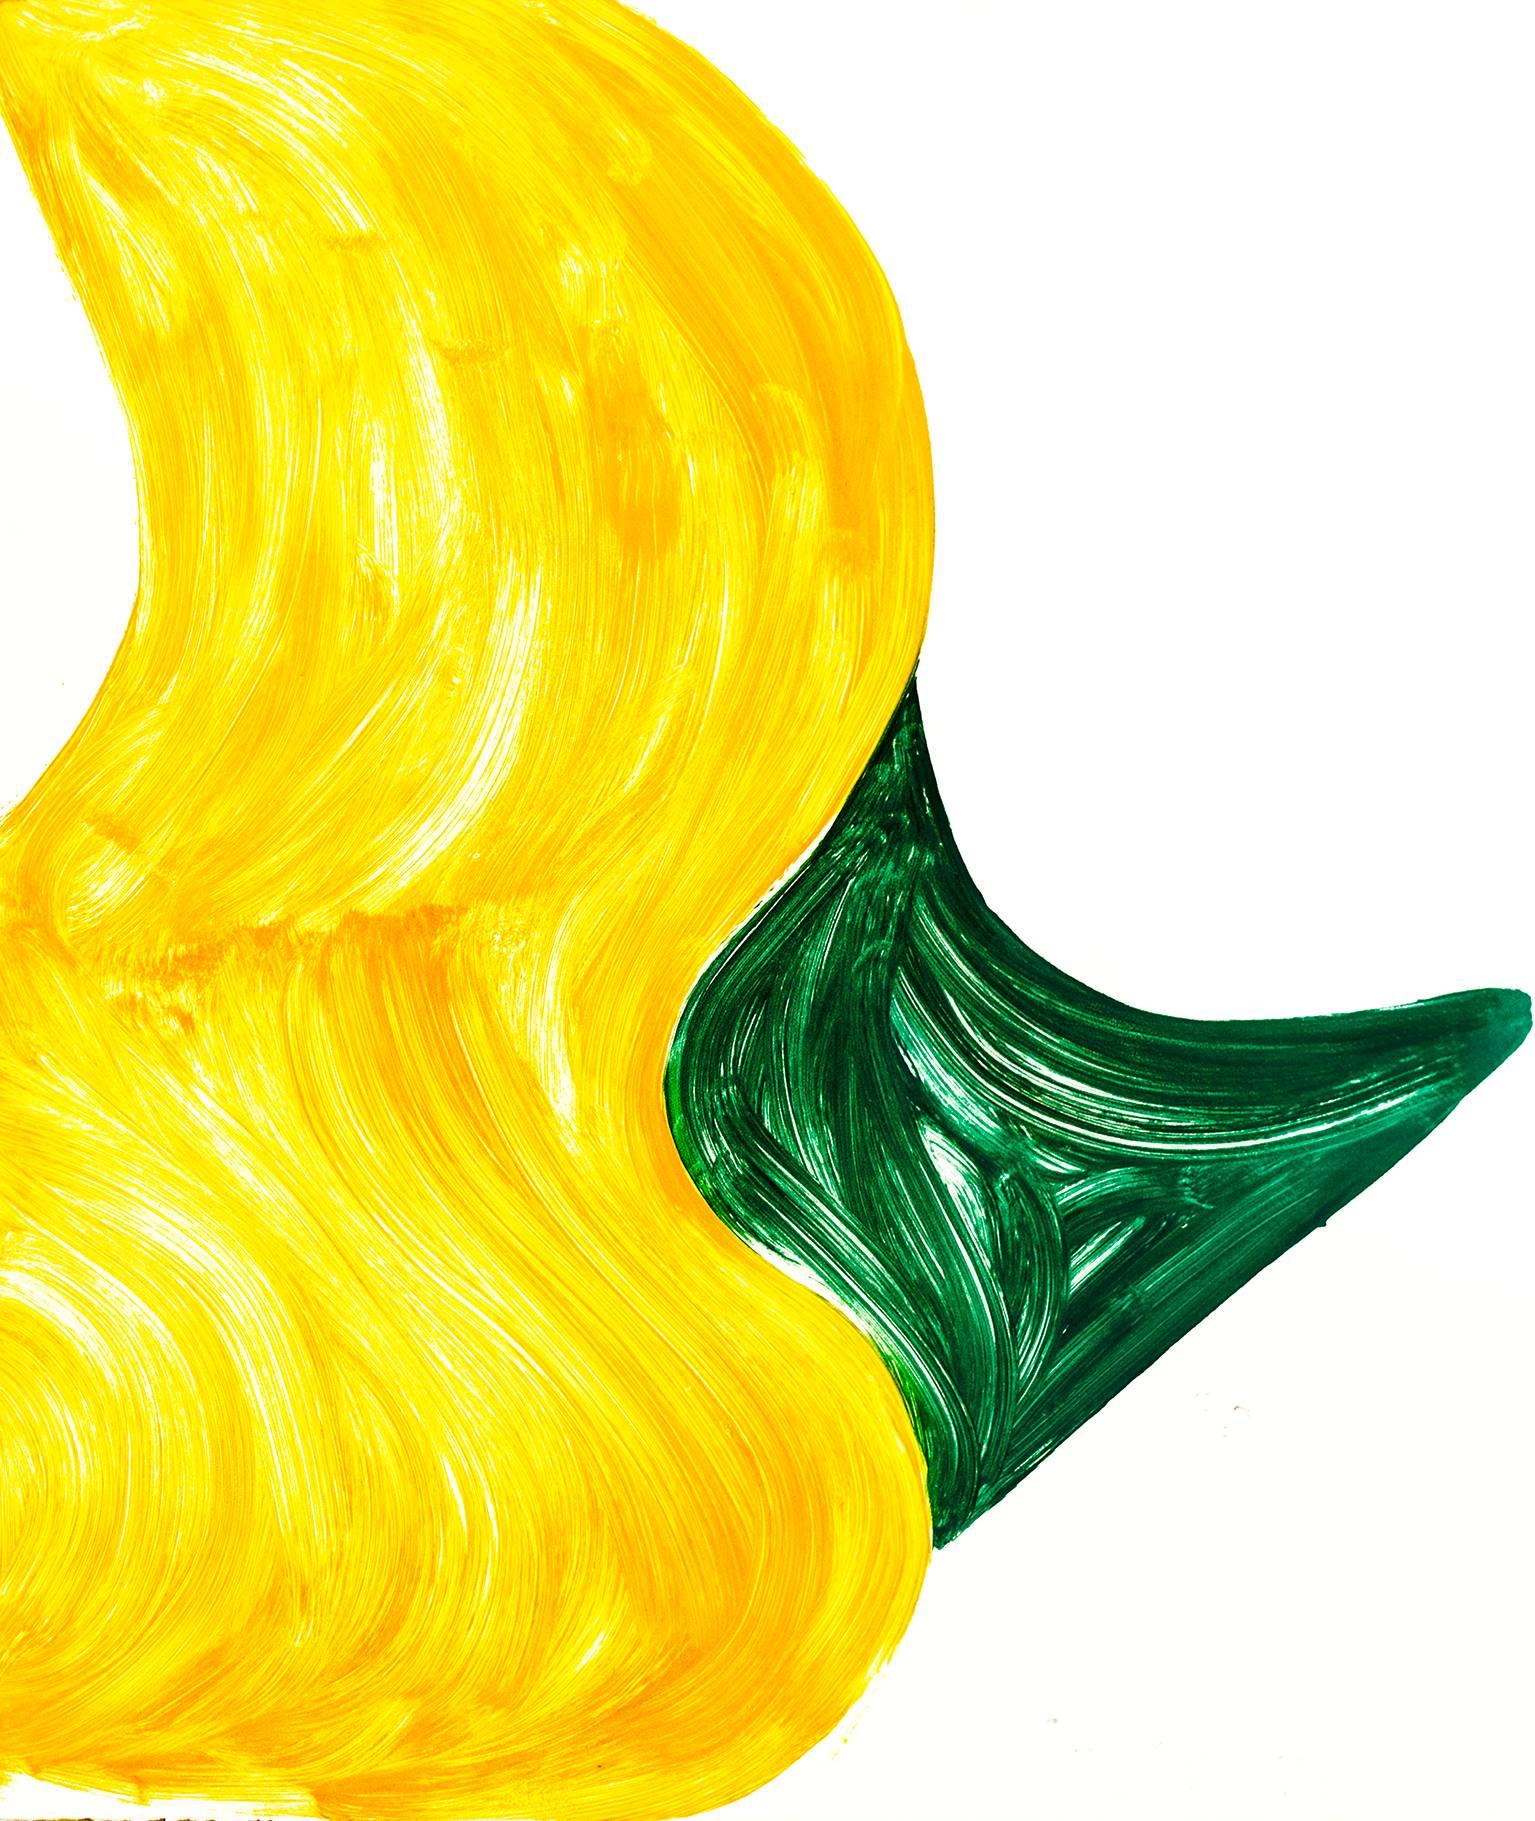 Andrea Belag Abstract Print – "Sunnyside Yards 27", large, abstract monoprint, vivid yellow, viridian green.